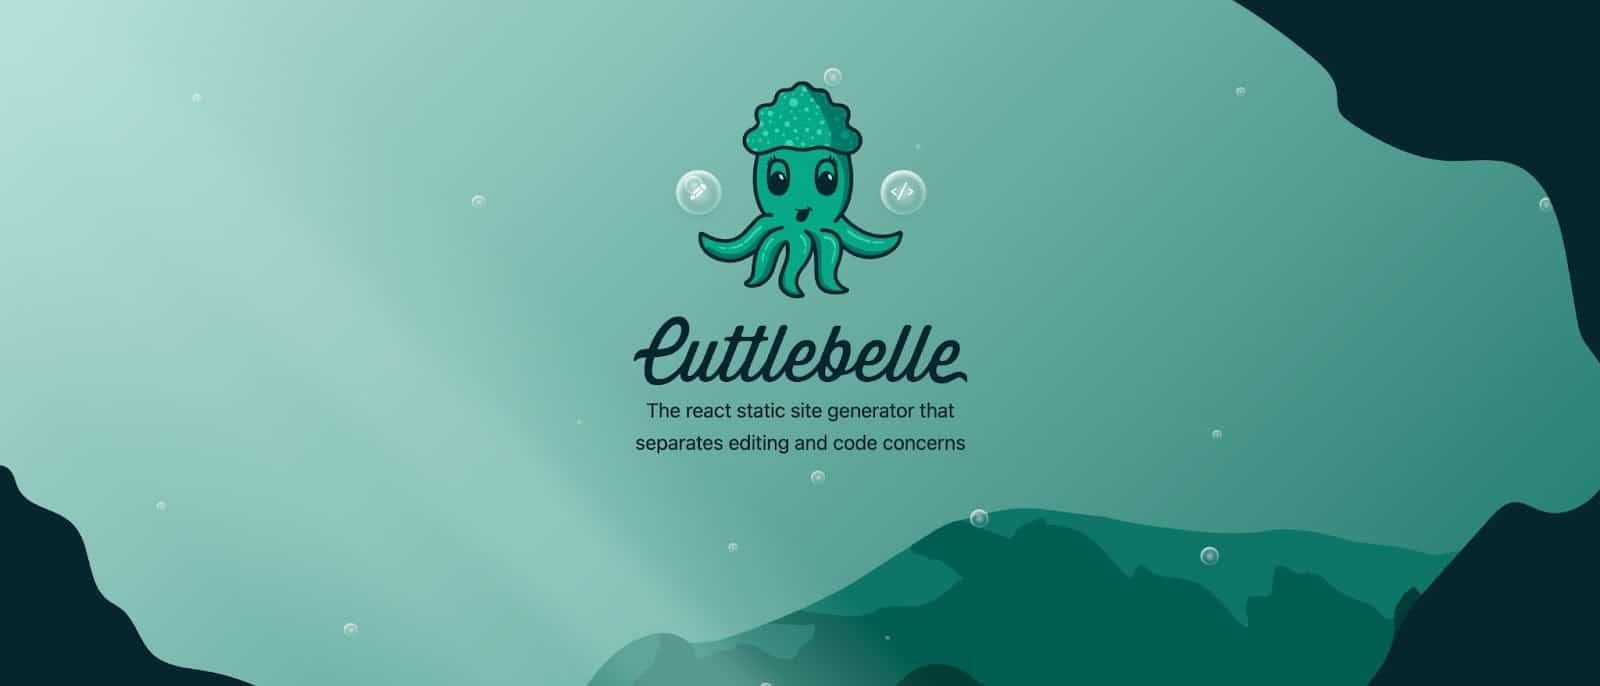 Cuttlebelle website forsiden